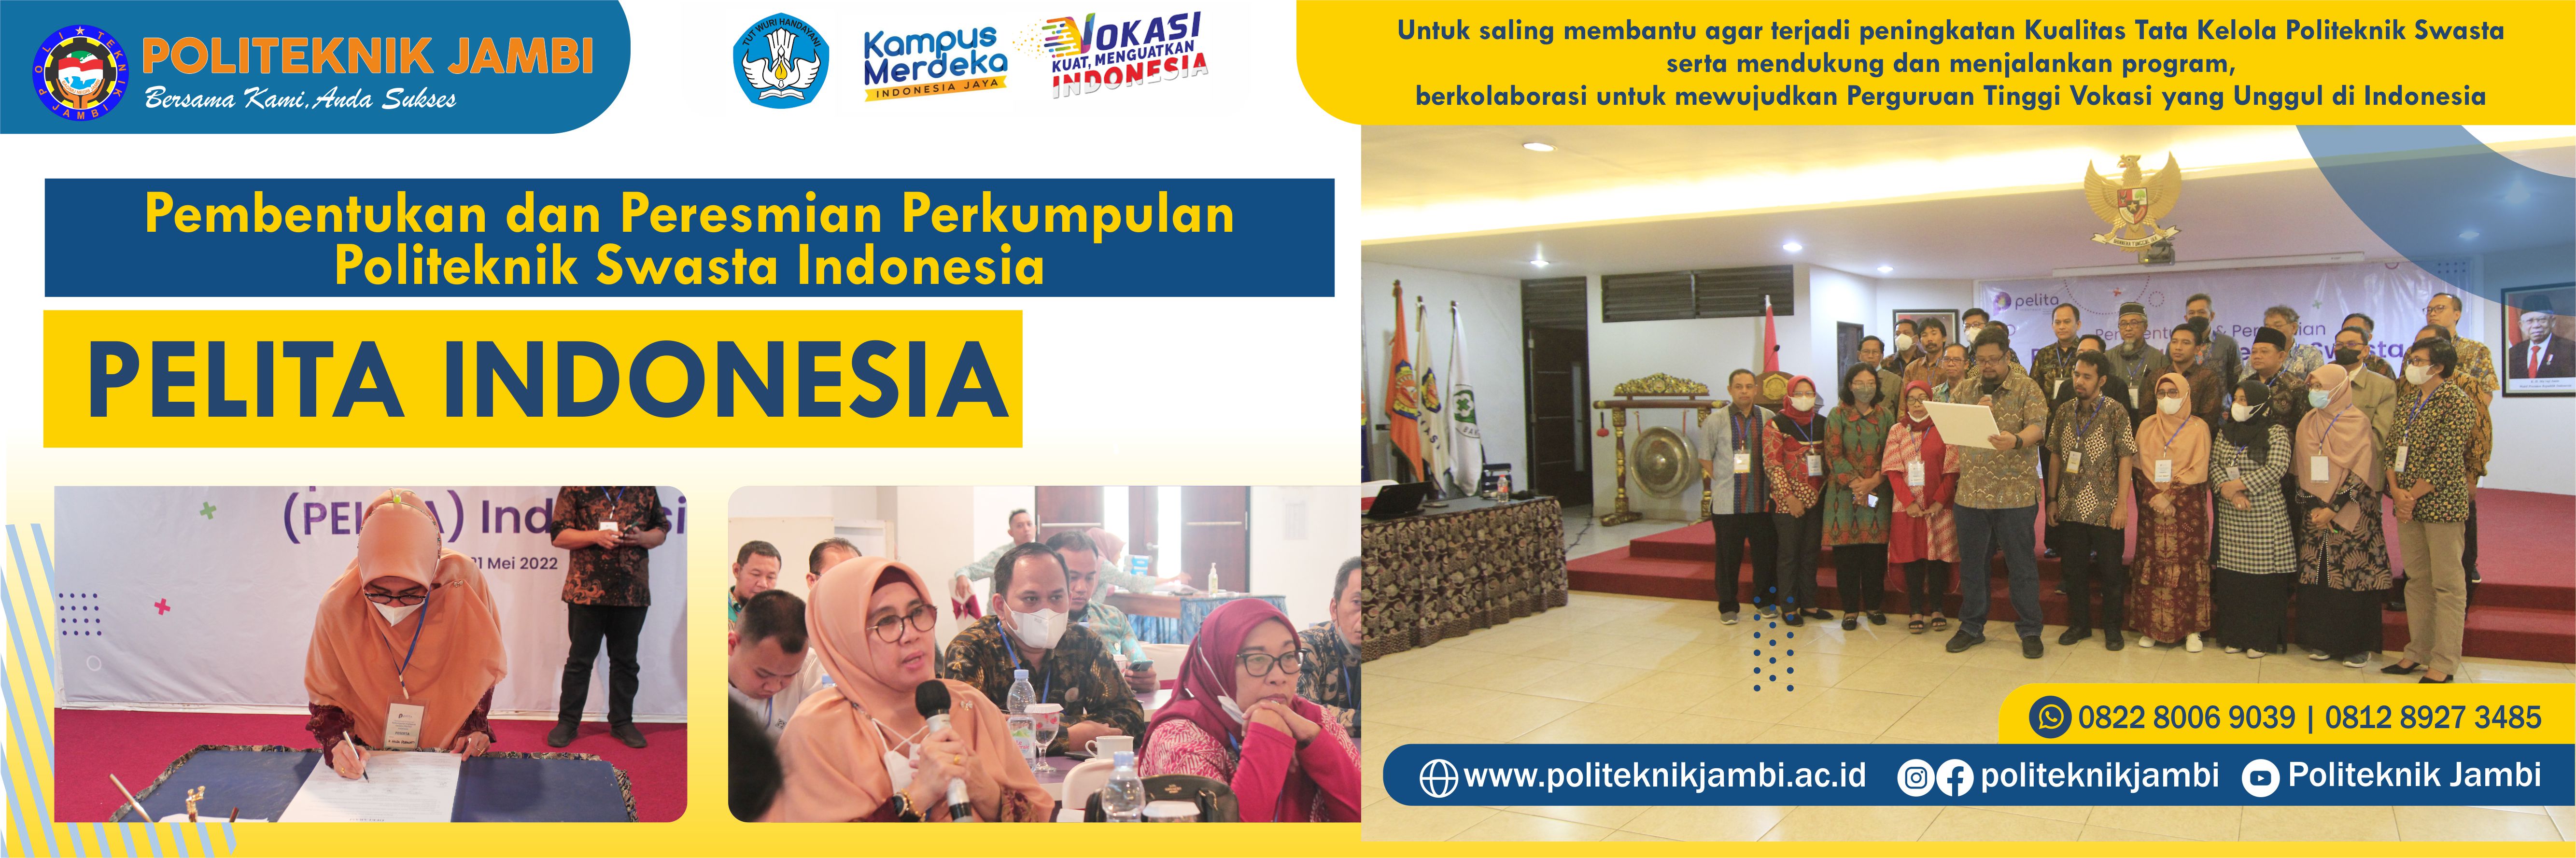 Deklarasi Pembentukan Dan Peresmian Perkumpulan Politeknik Swasta (PELITA) Indonesia.